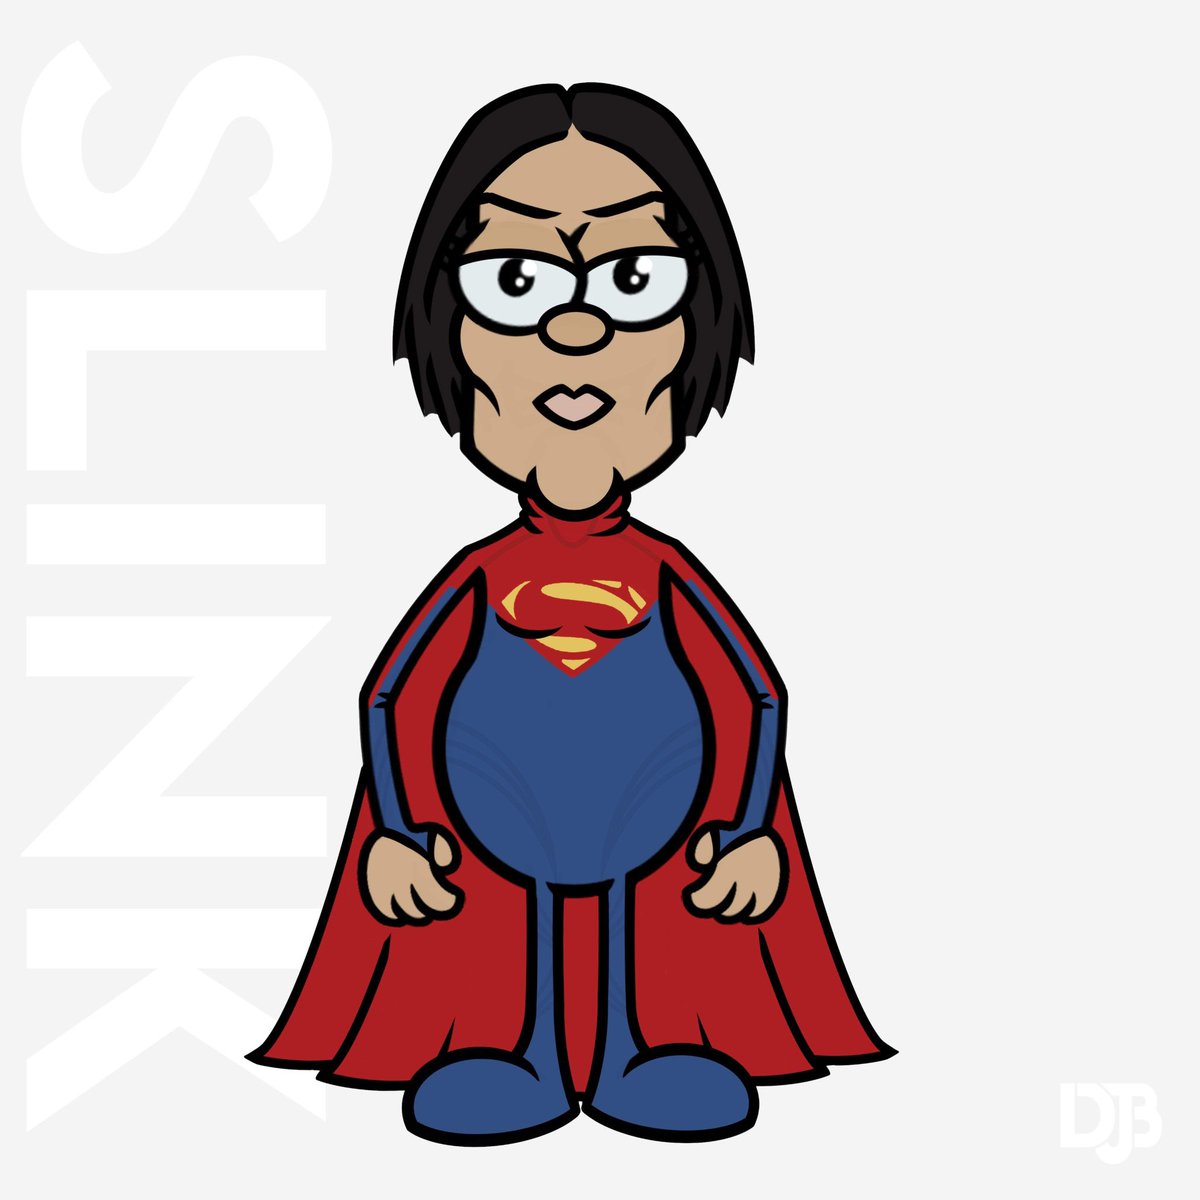 The Flash’s Supergirl got SLINKd #supergirl #theflash #karazorel #sashacalle #superman #dccomics #superheroes #slink #slinkd #djbu #artistofinstagram #artwork #artist #characterdesign @SashaCalle